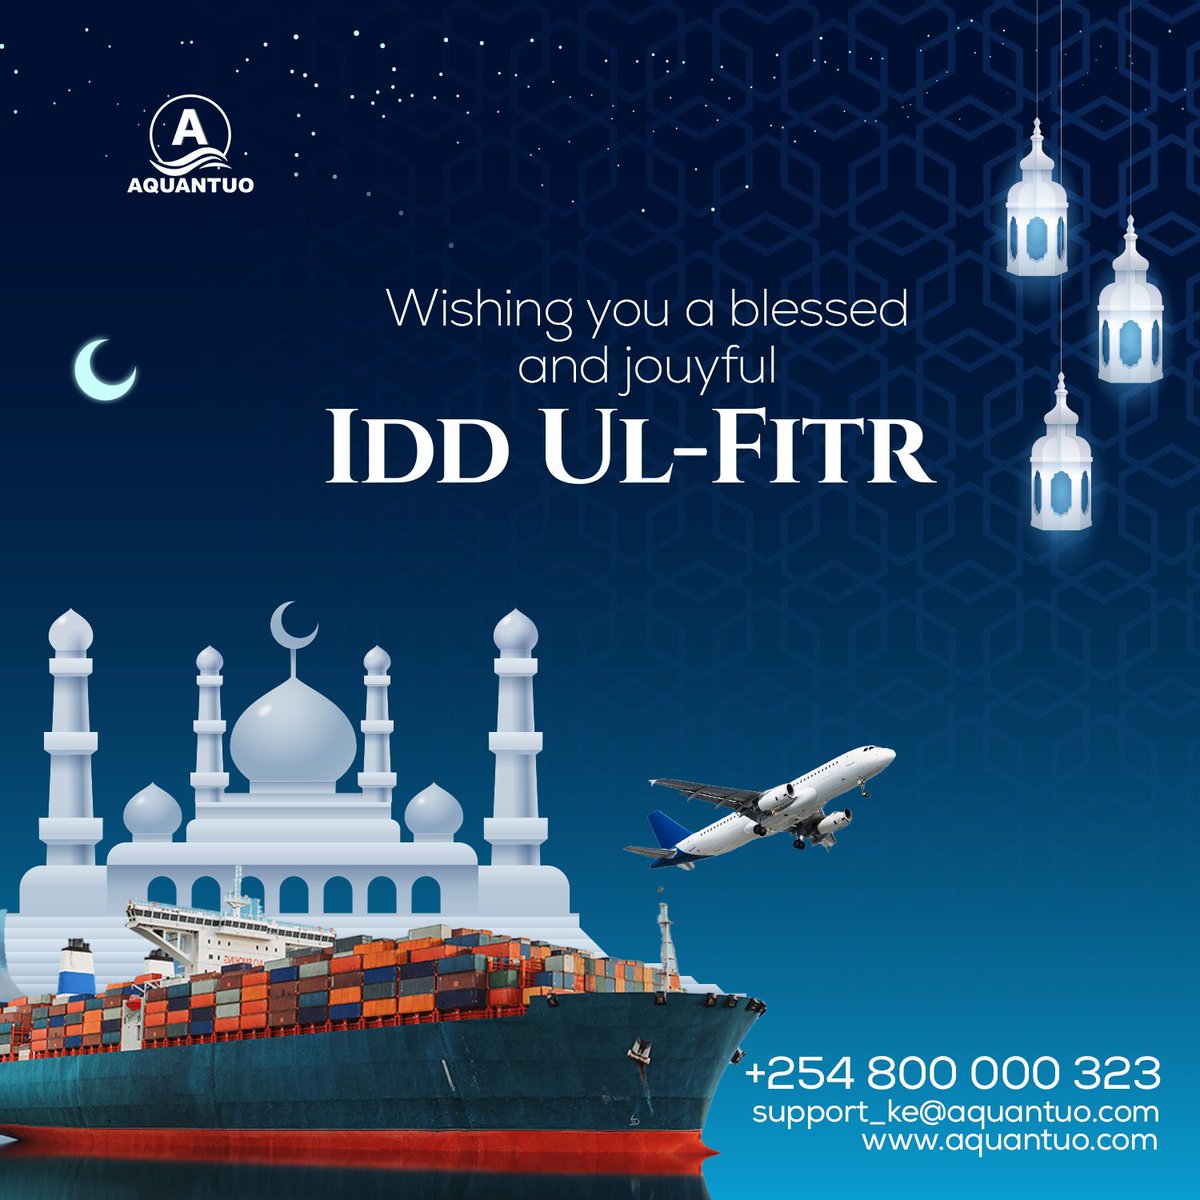 Happy Idd-ul-Fitr🎉
#BlessingsOfIdd #FestiveSeason #SpreadLove  #IddUlFitrCelebration